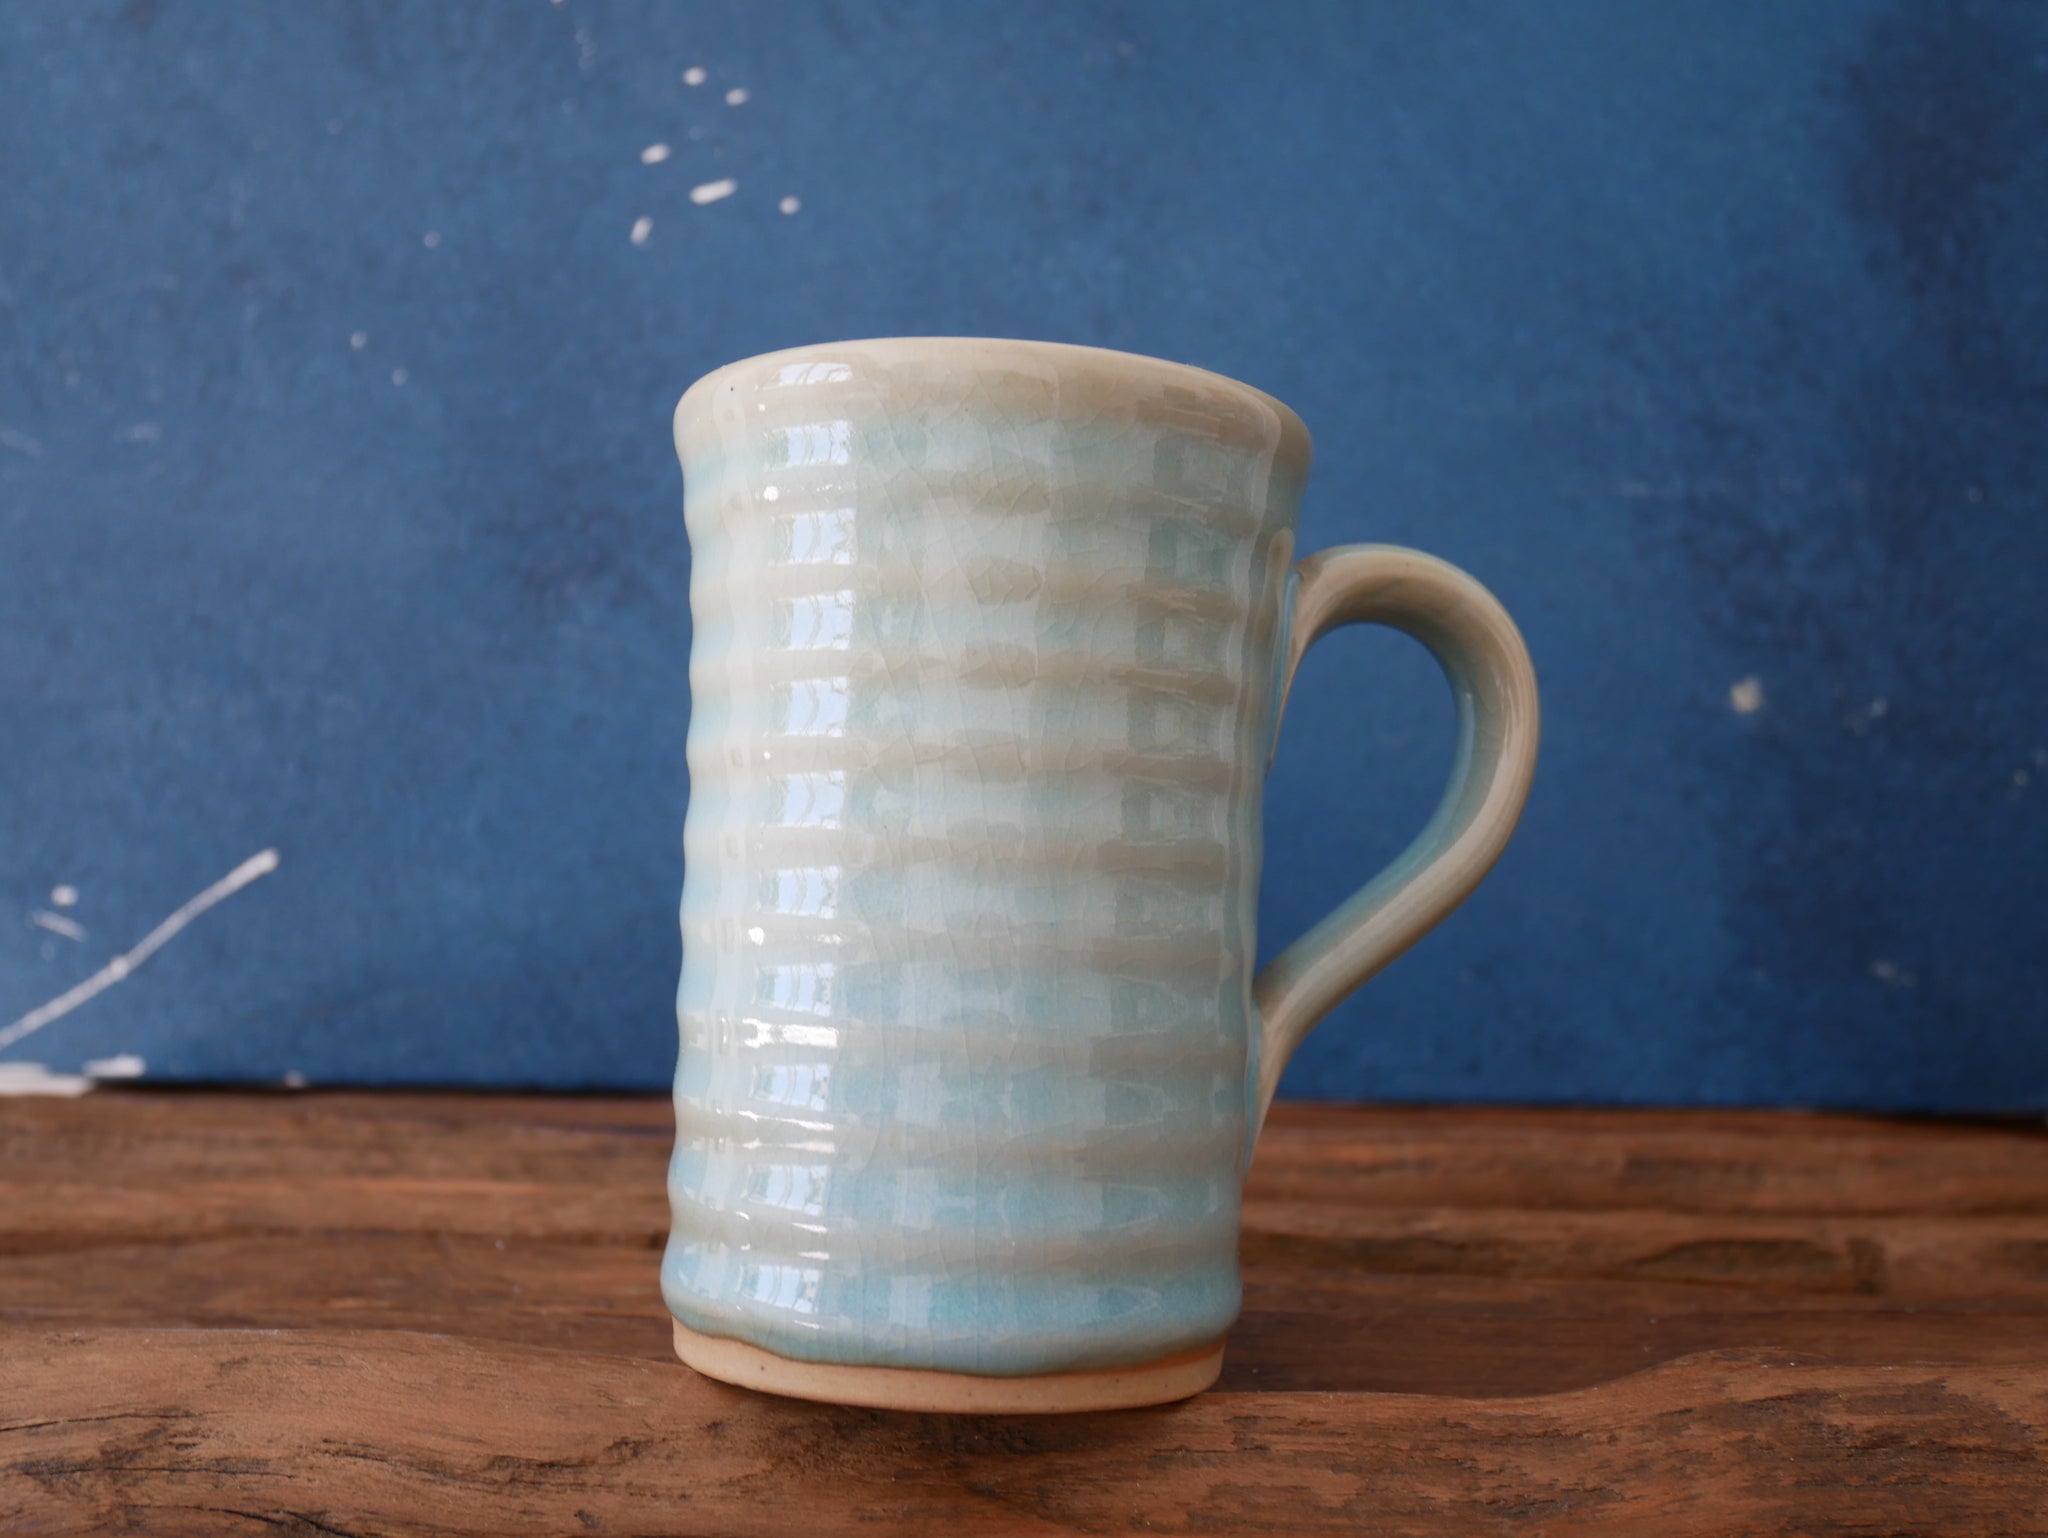 Blue celadon mug with handle